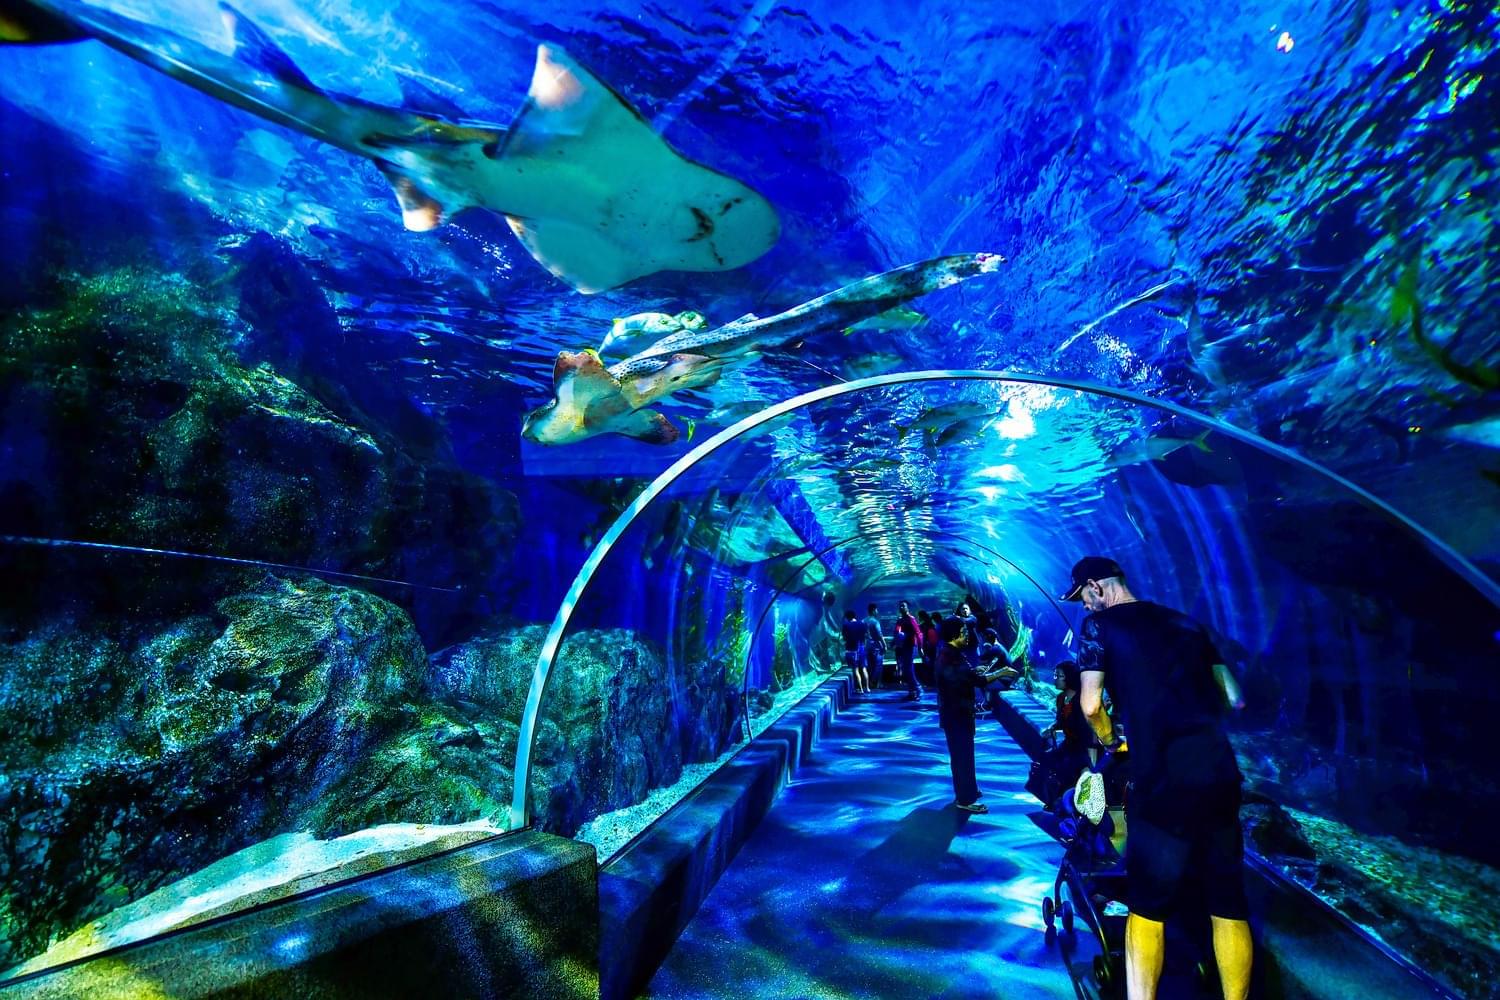 Aquarium Zones at SEA Life Bangkok Ocean World